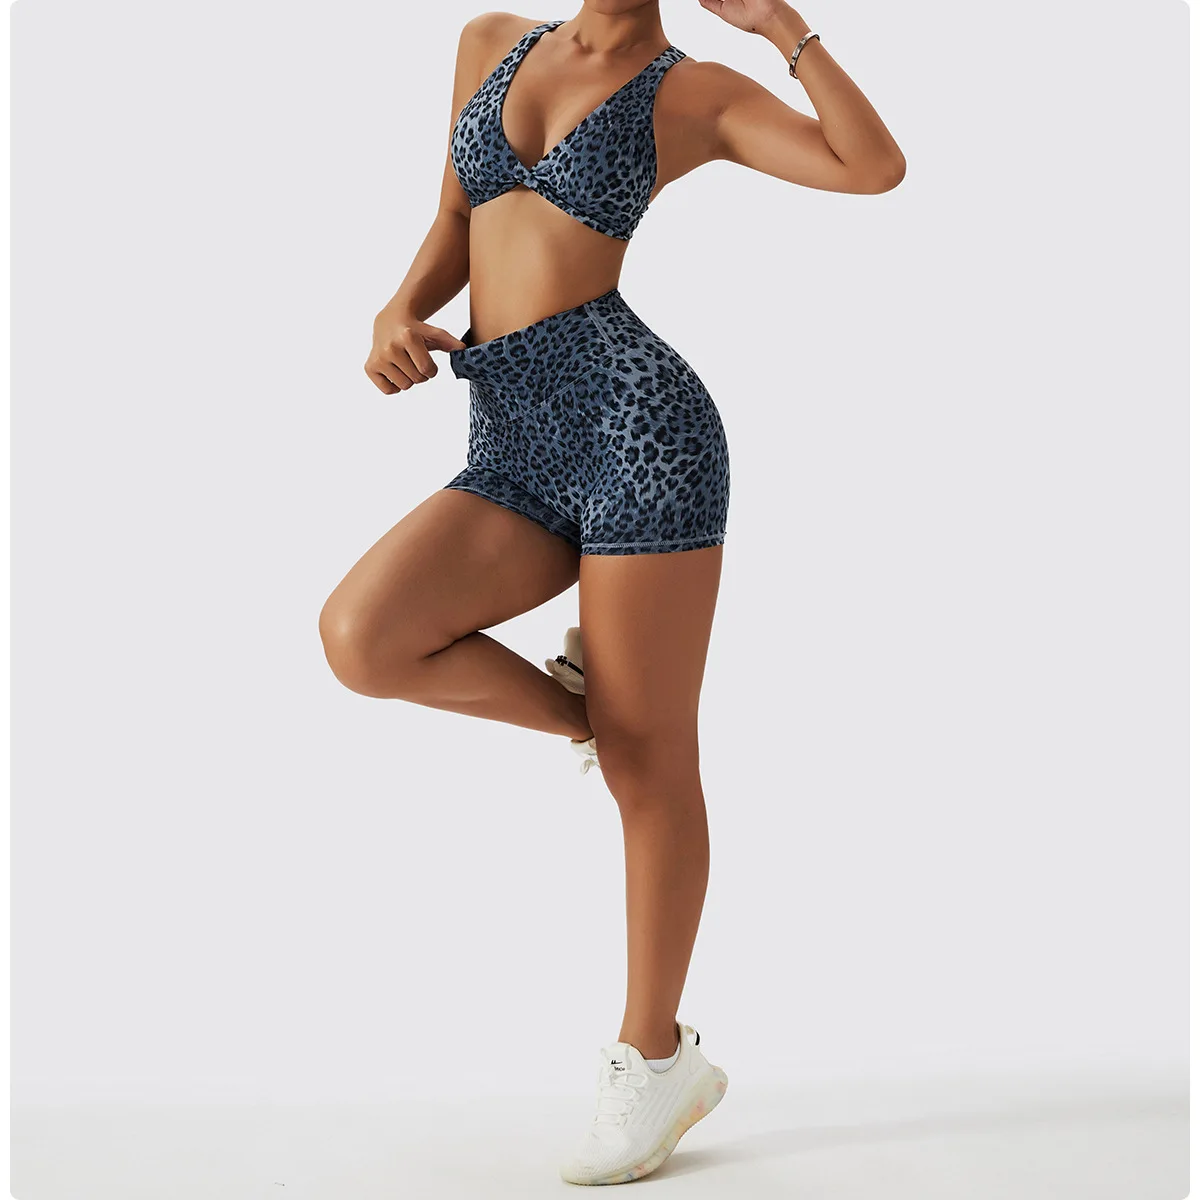 YIYI European Hot Sale Twist Sexy Sports Bra Sets High Waist Leggings Sets For Women Breathable Comfortable Leopard Workout Sets